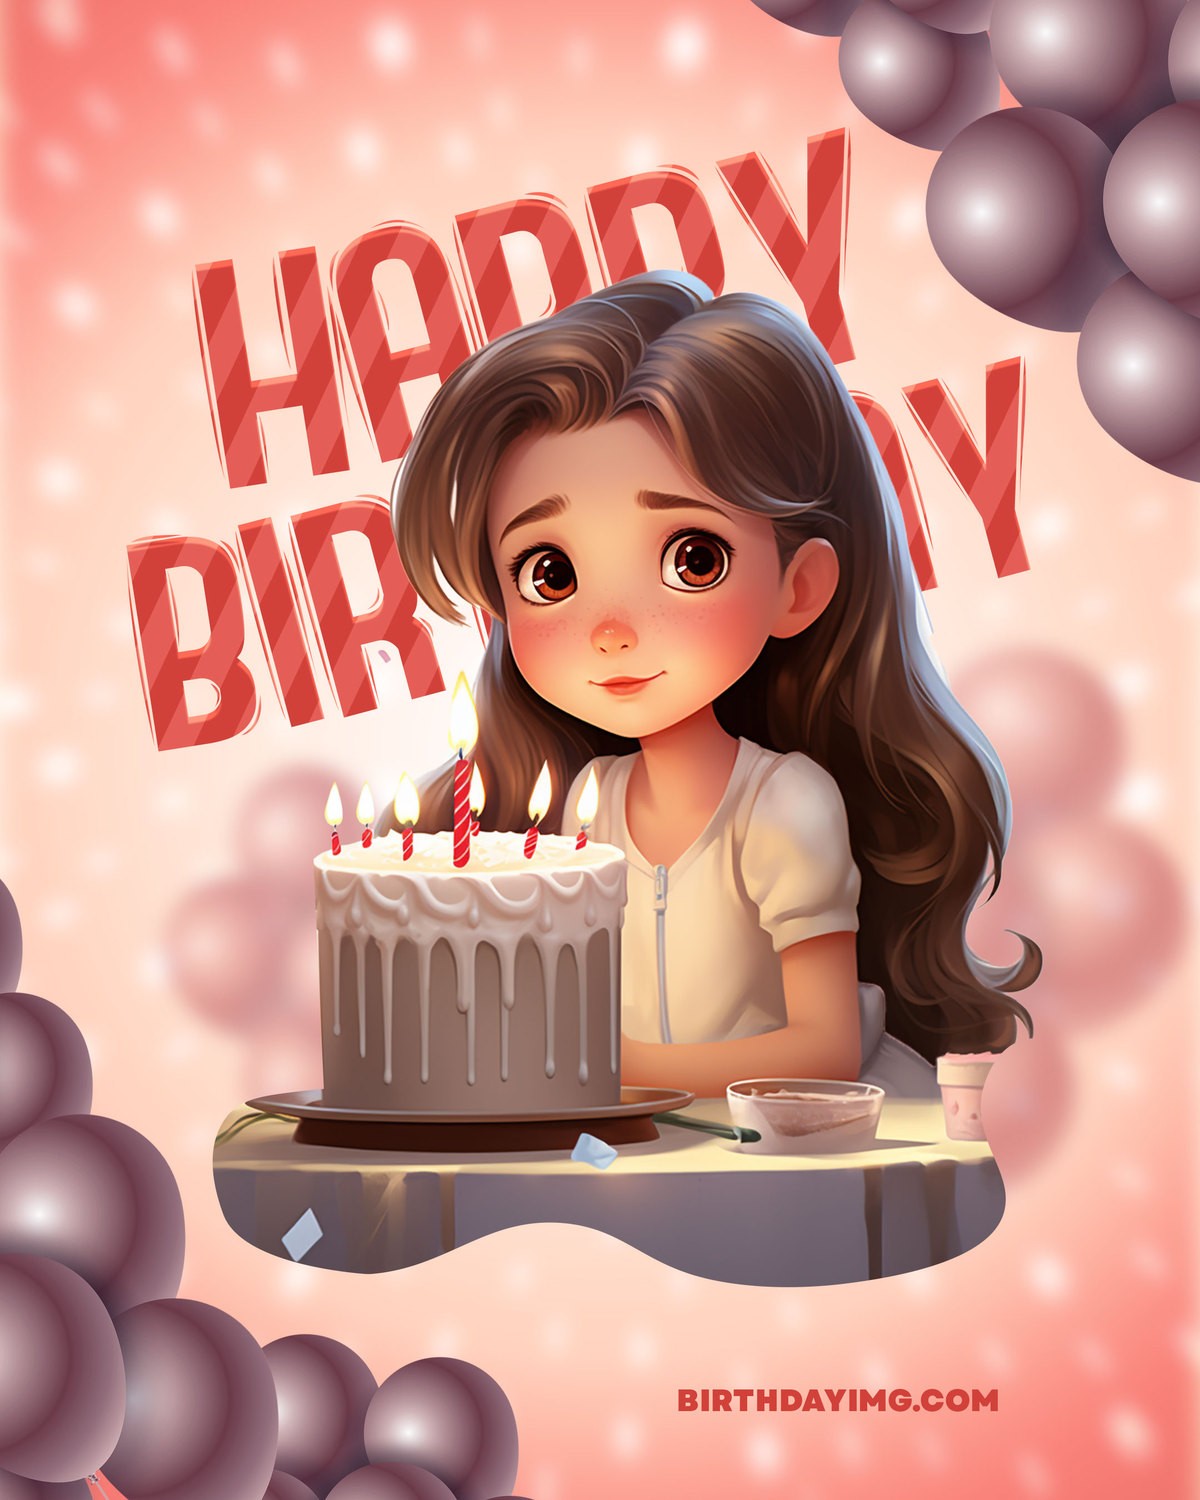 Free Birthday Image for a Girl with Balloons - birthdayimg.com